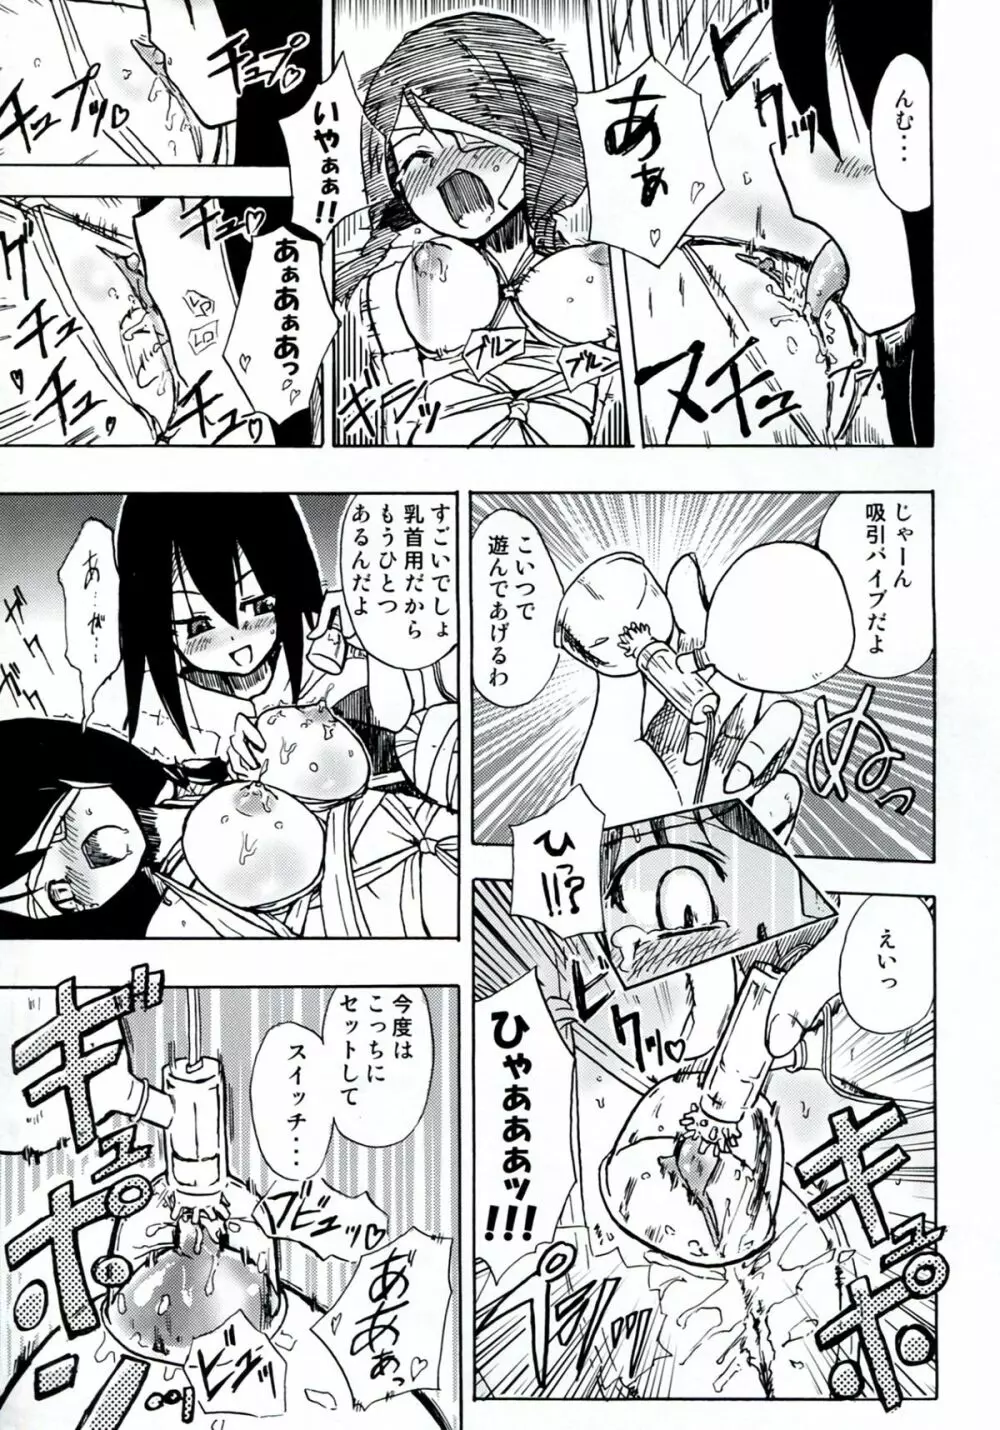 Homuraya Milk ★ Collection 2 - page89